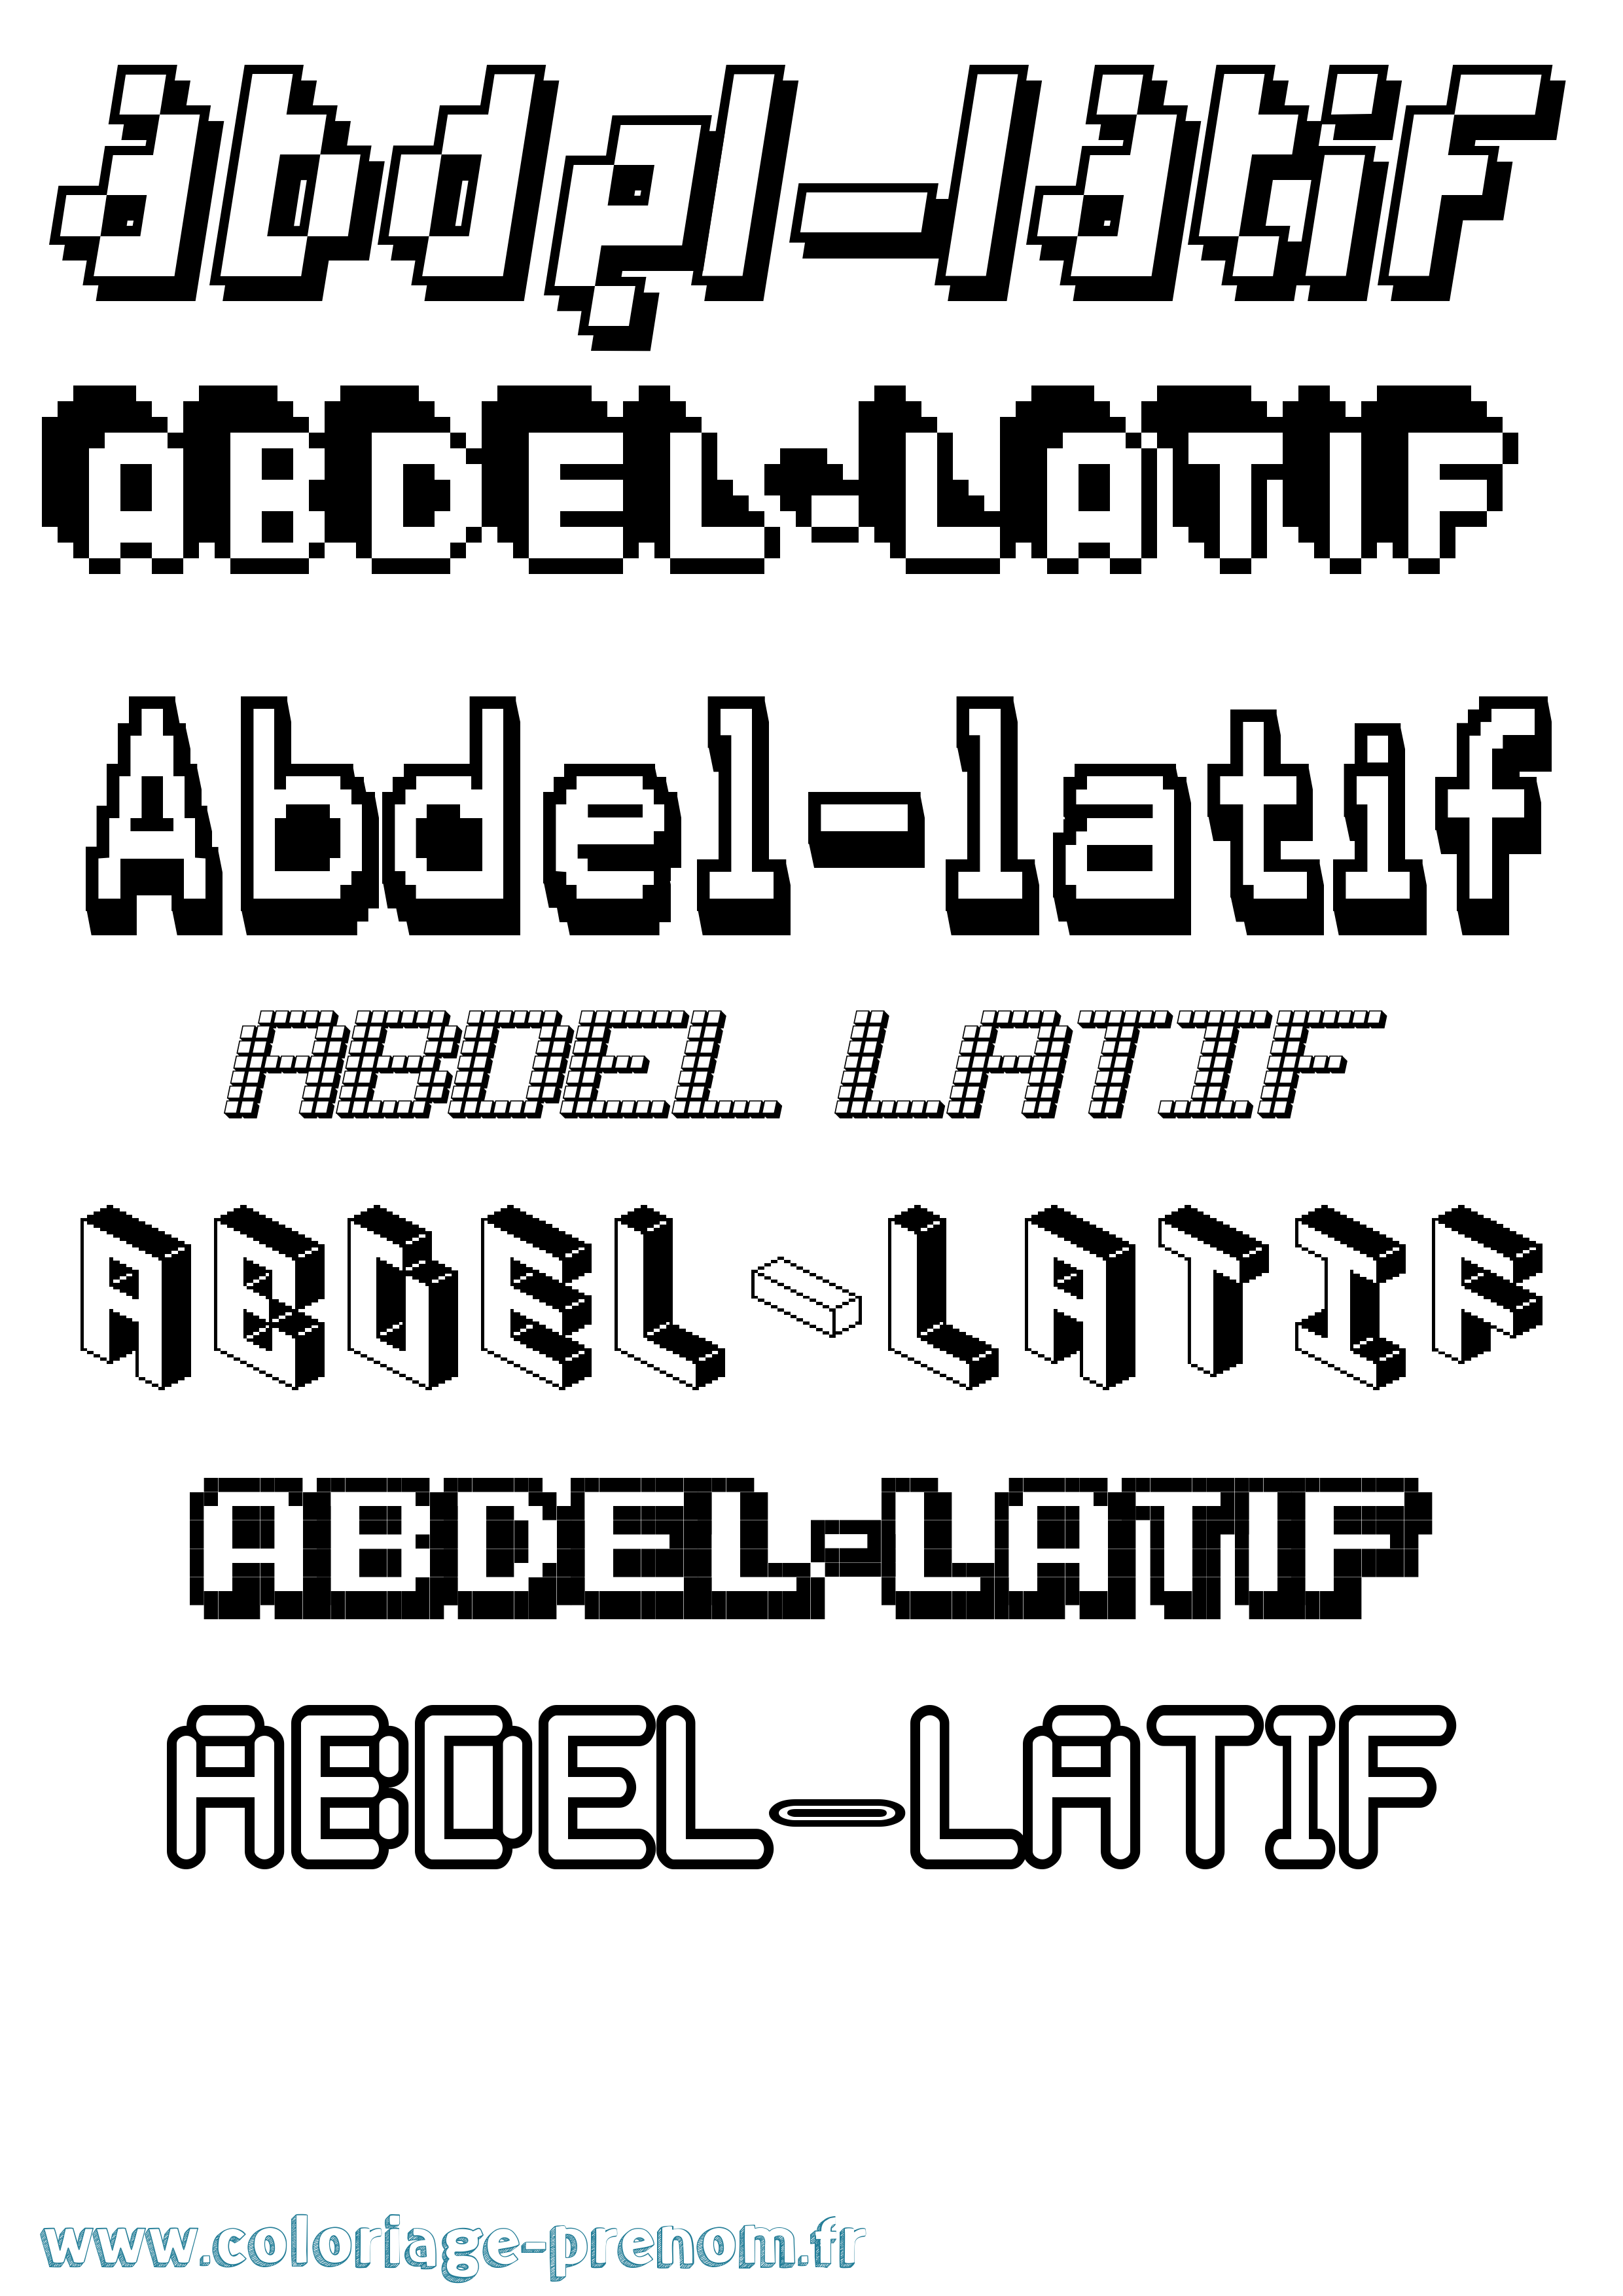 Coloriage prénom Abdel-Latif Pixel